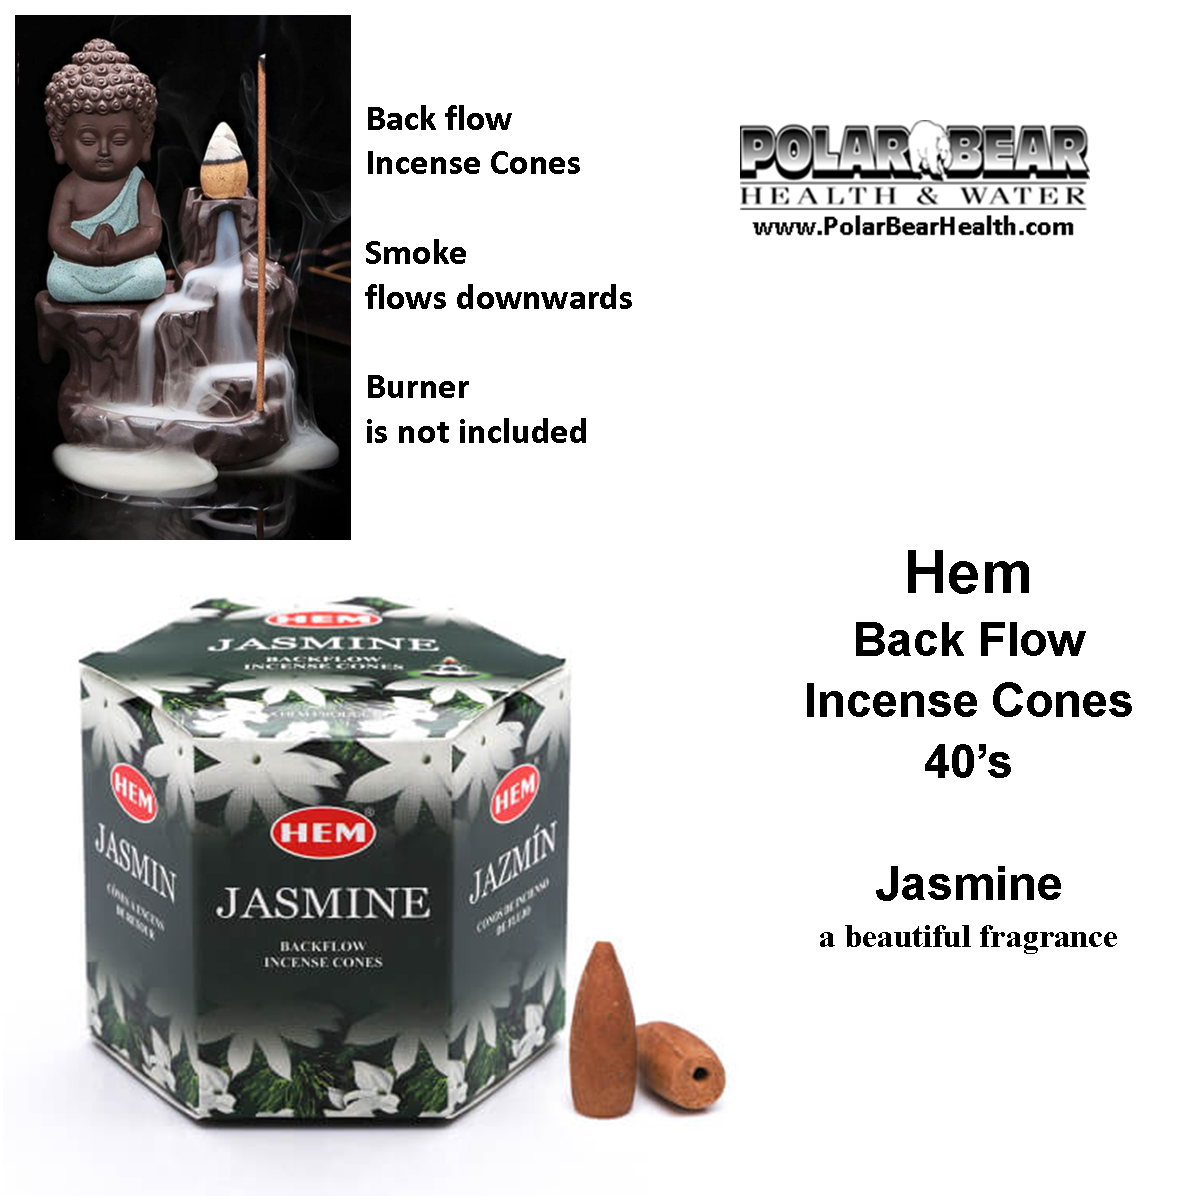 BACKFLOW CONE INCENSE - Jasmine - HEM 40's, Polar Bear Health & Water